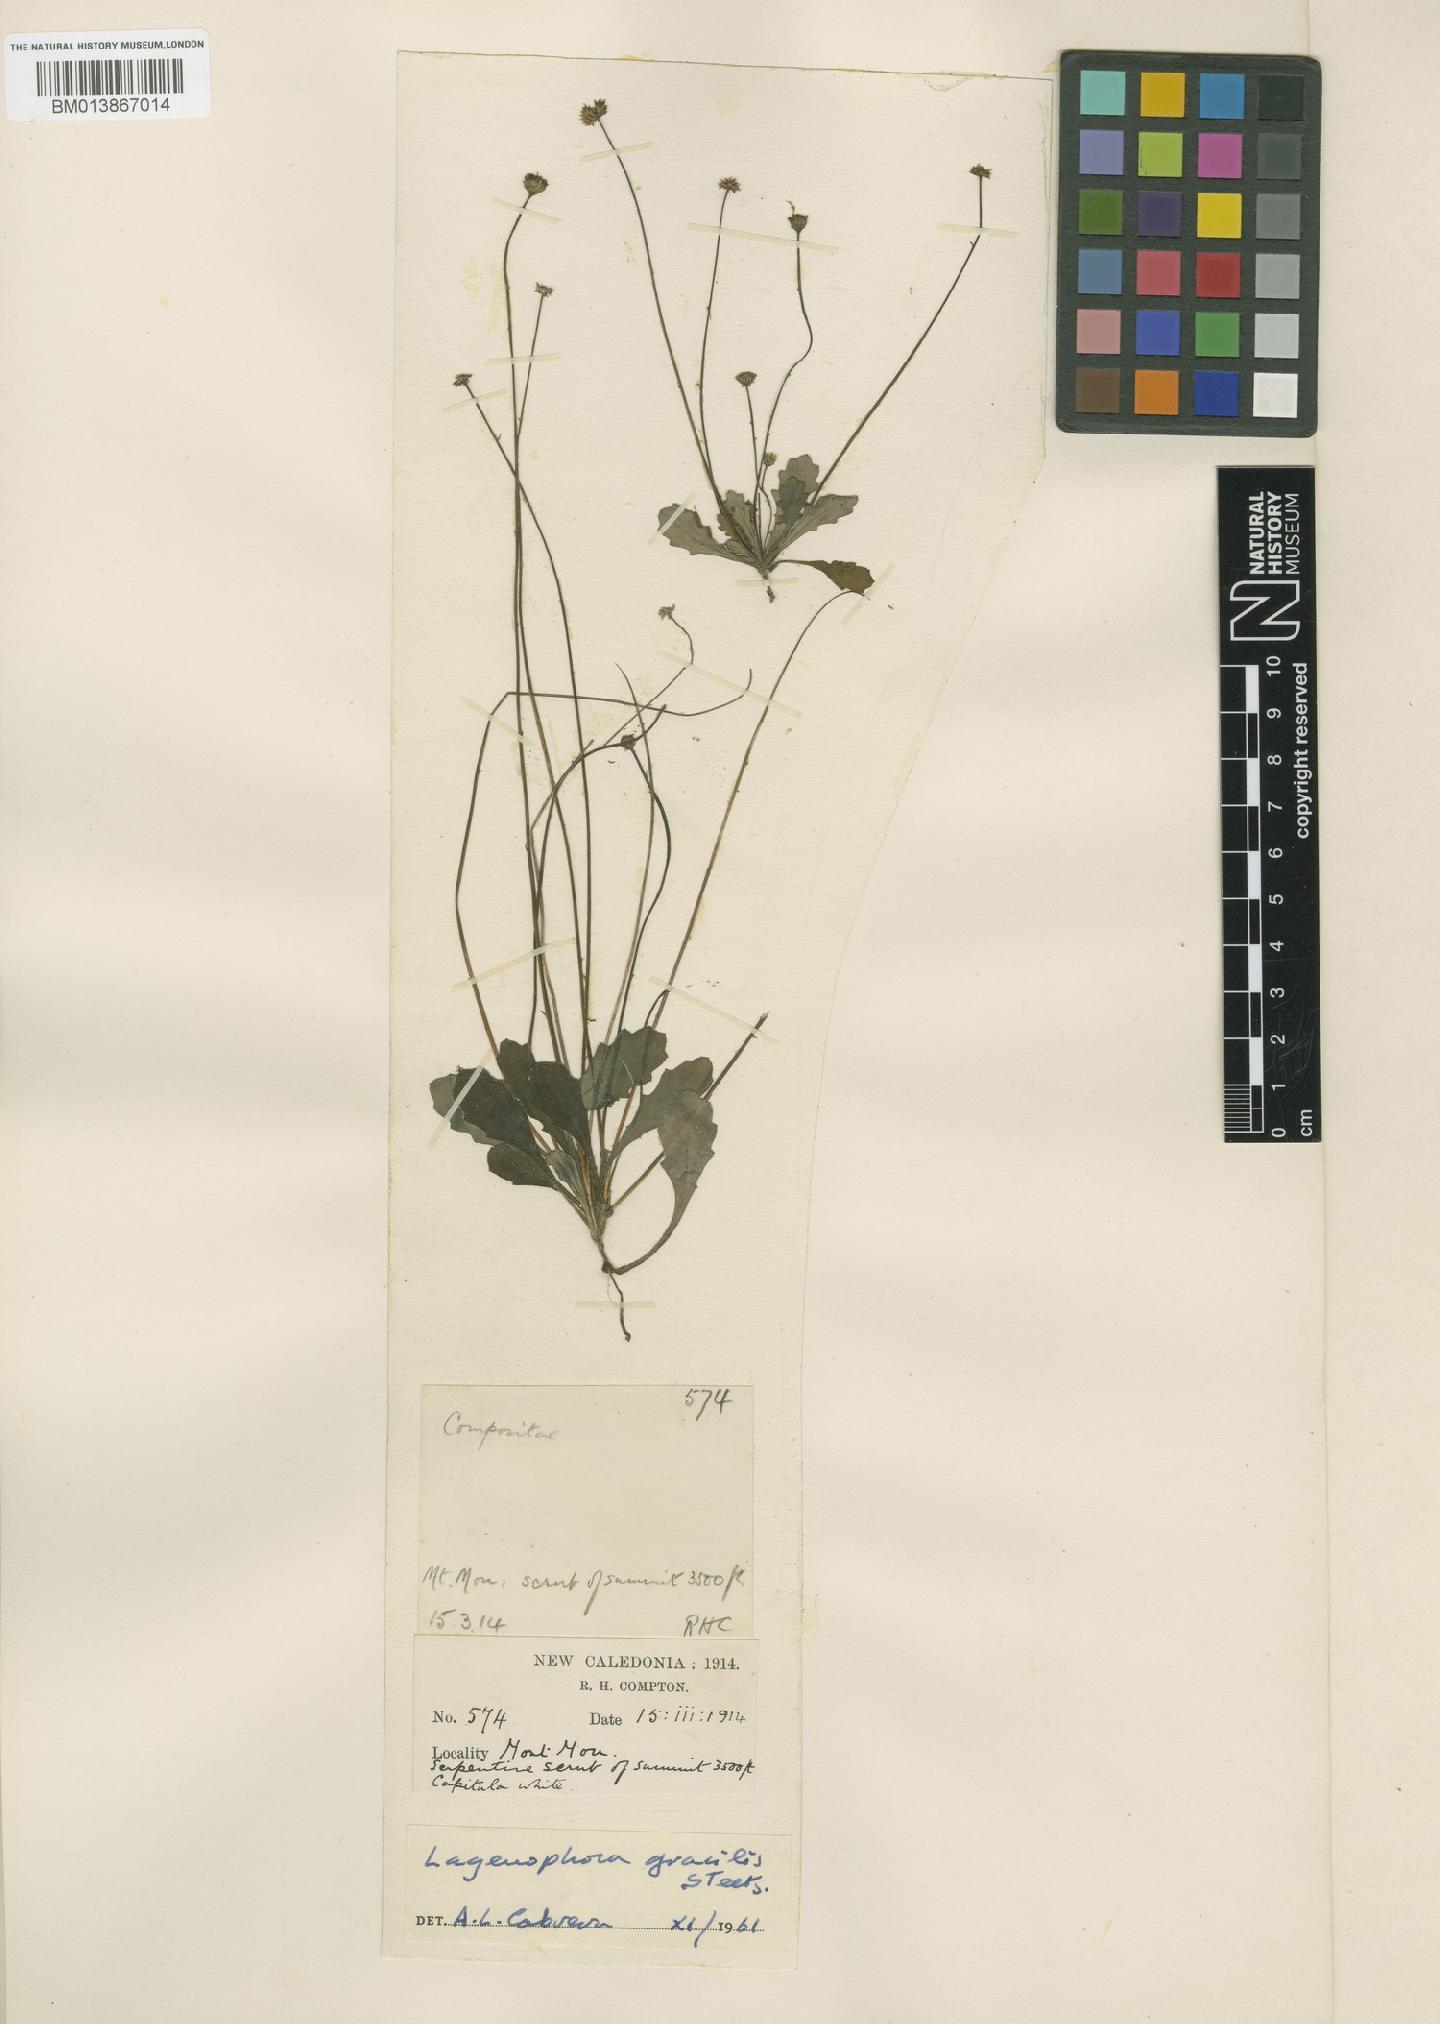 To NHMUK collection (Lagenophora gracilis Steetz; NHMUK:ecatalogue:9200449)